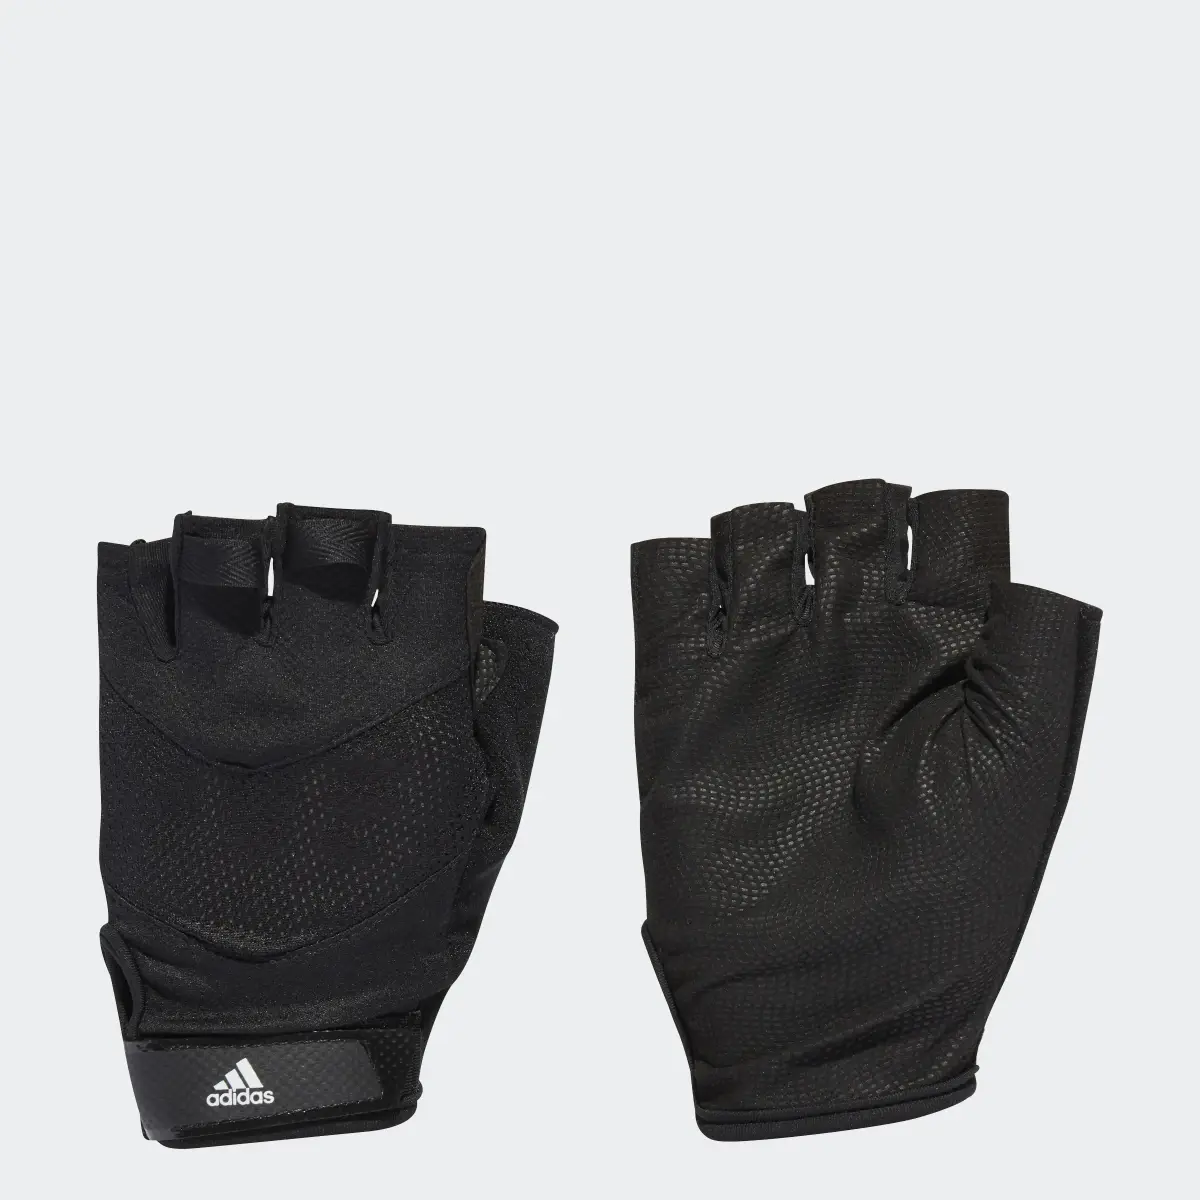 Adidas Training Gloves. 1